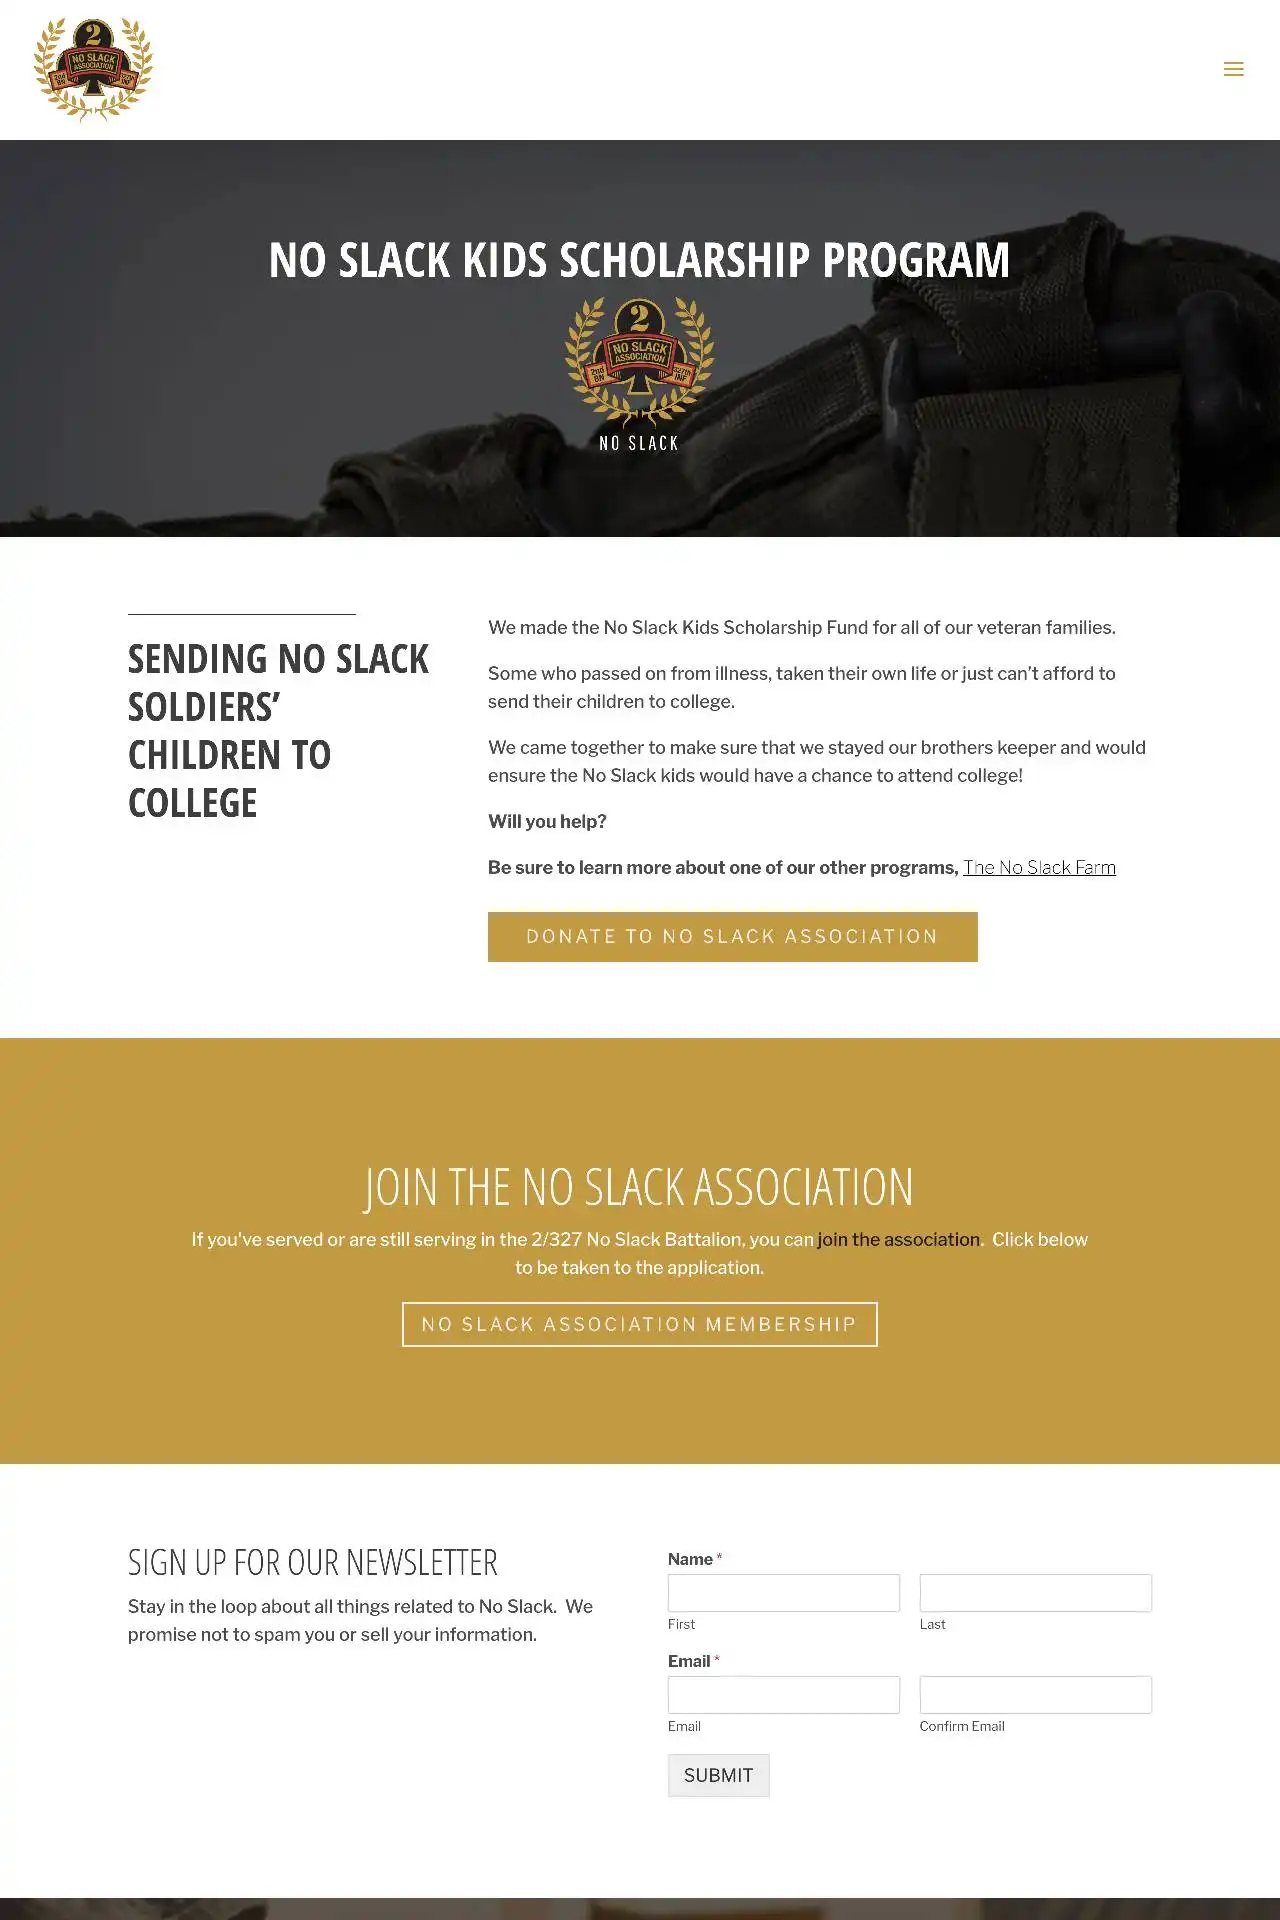 https noslackassociation.com no slack kids scholarship program